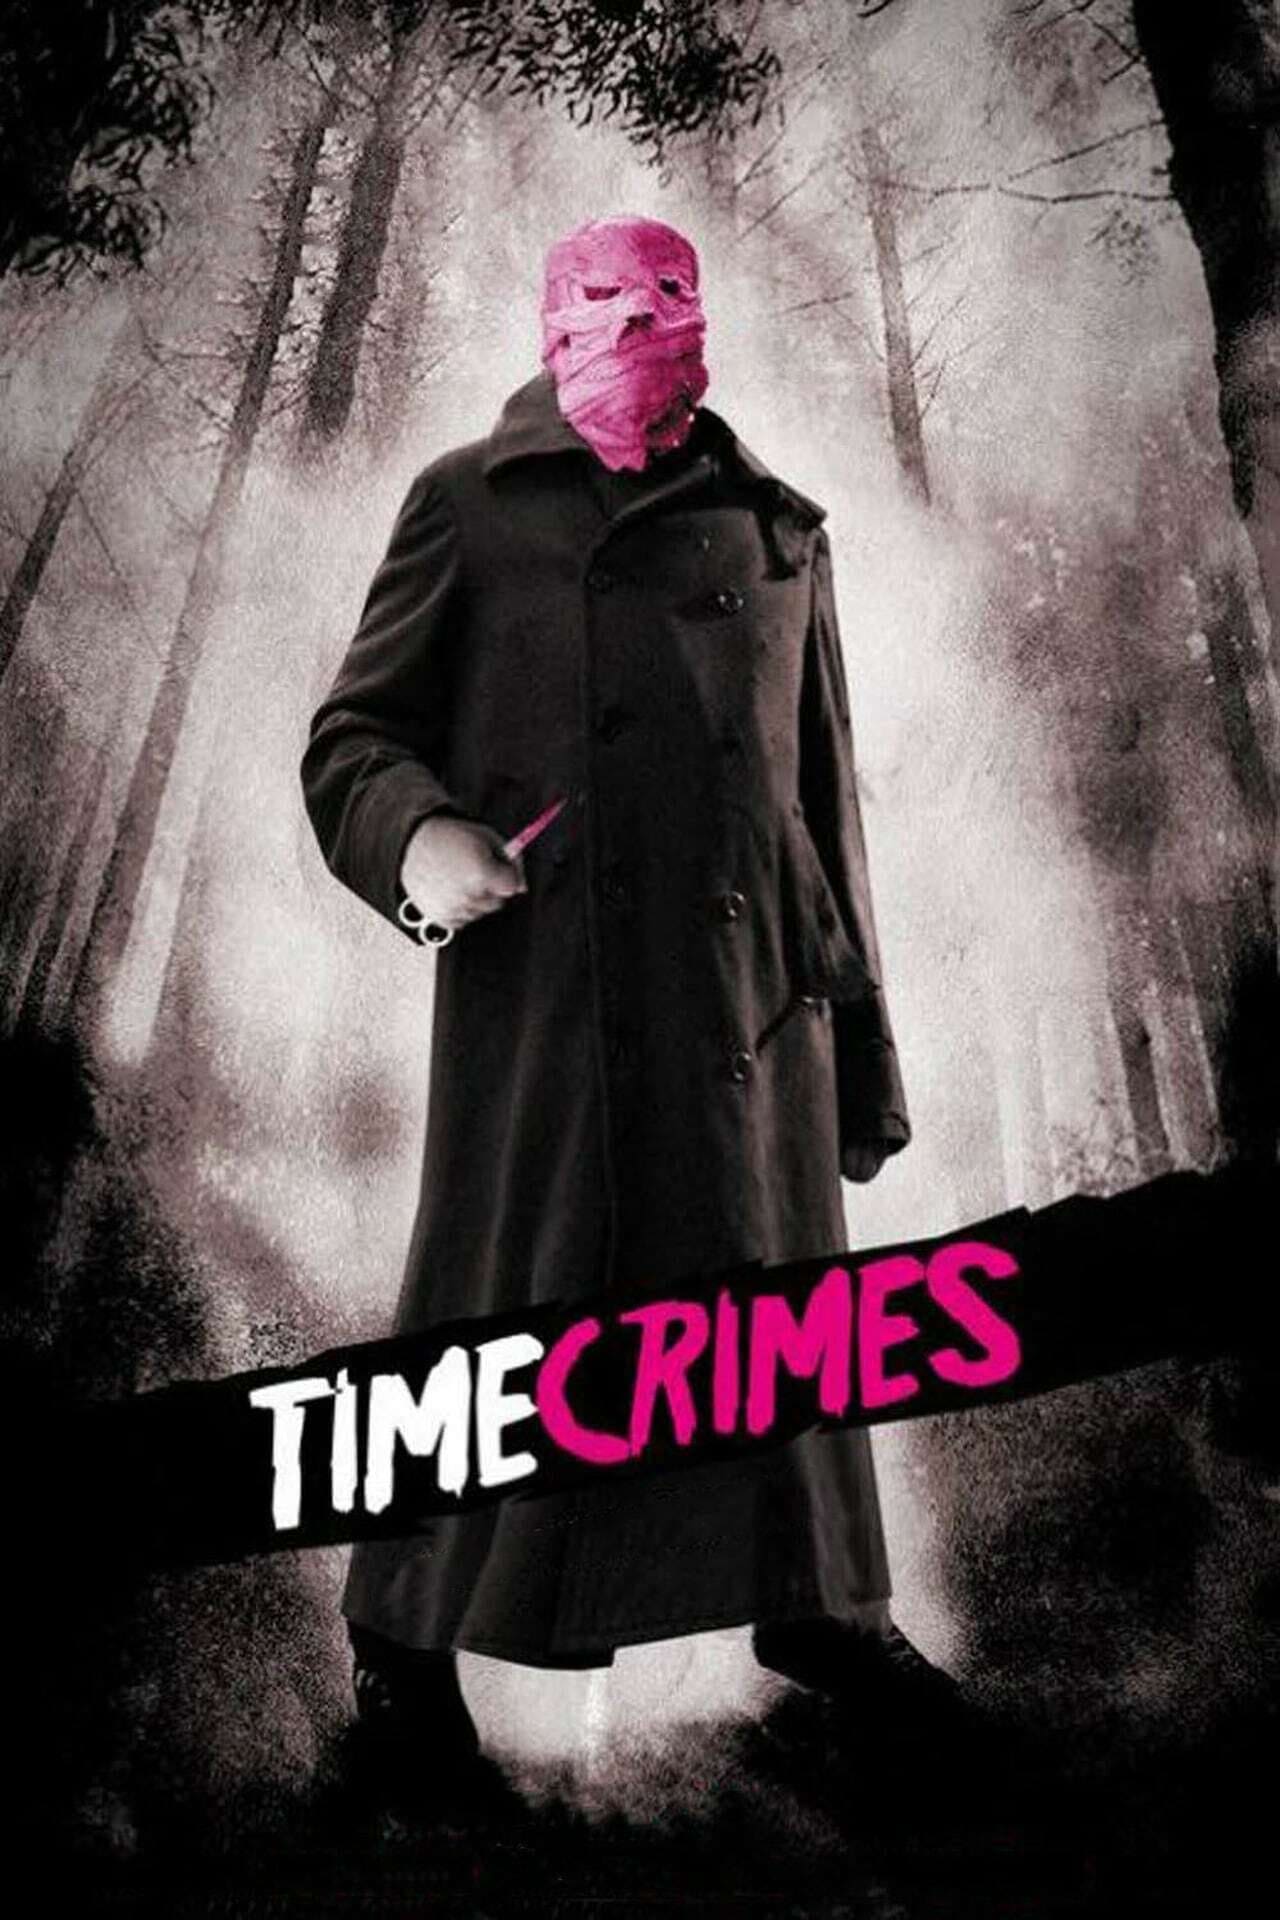 Timecrimes [HD] (2007)